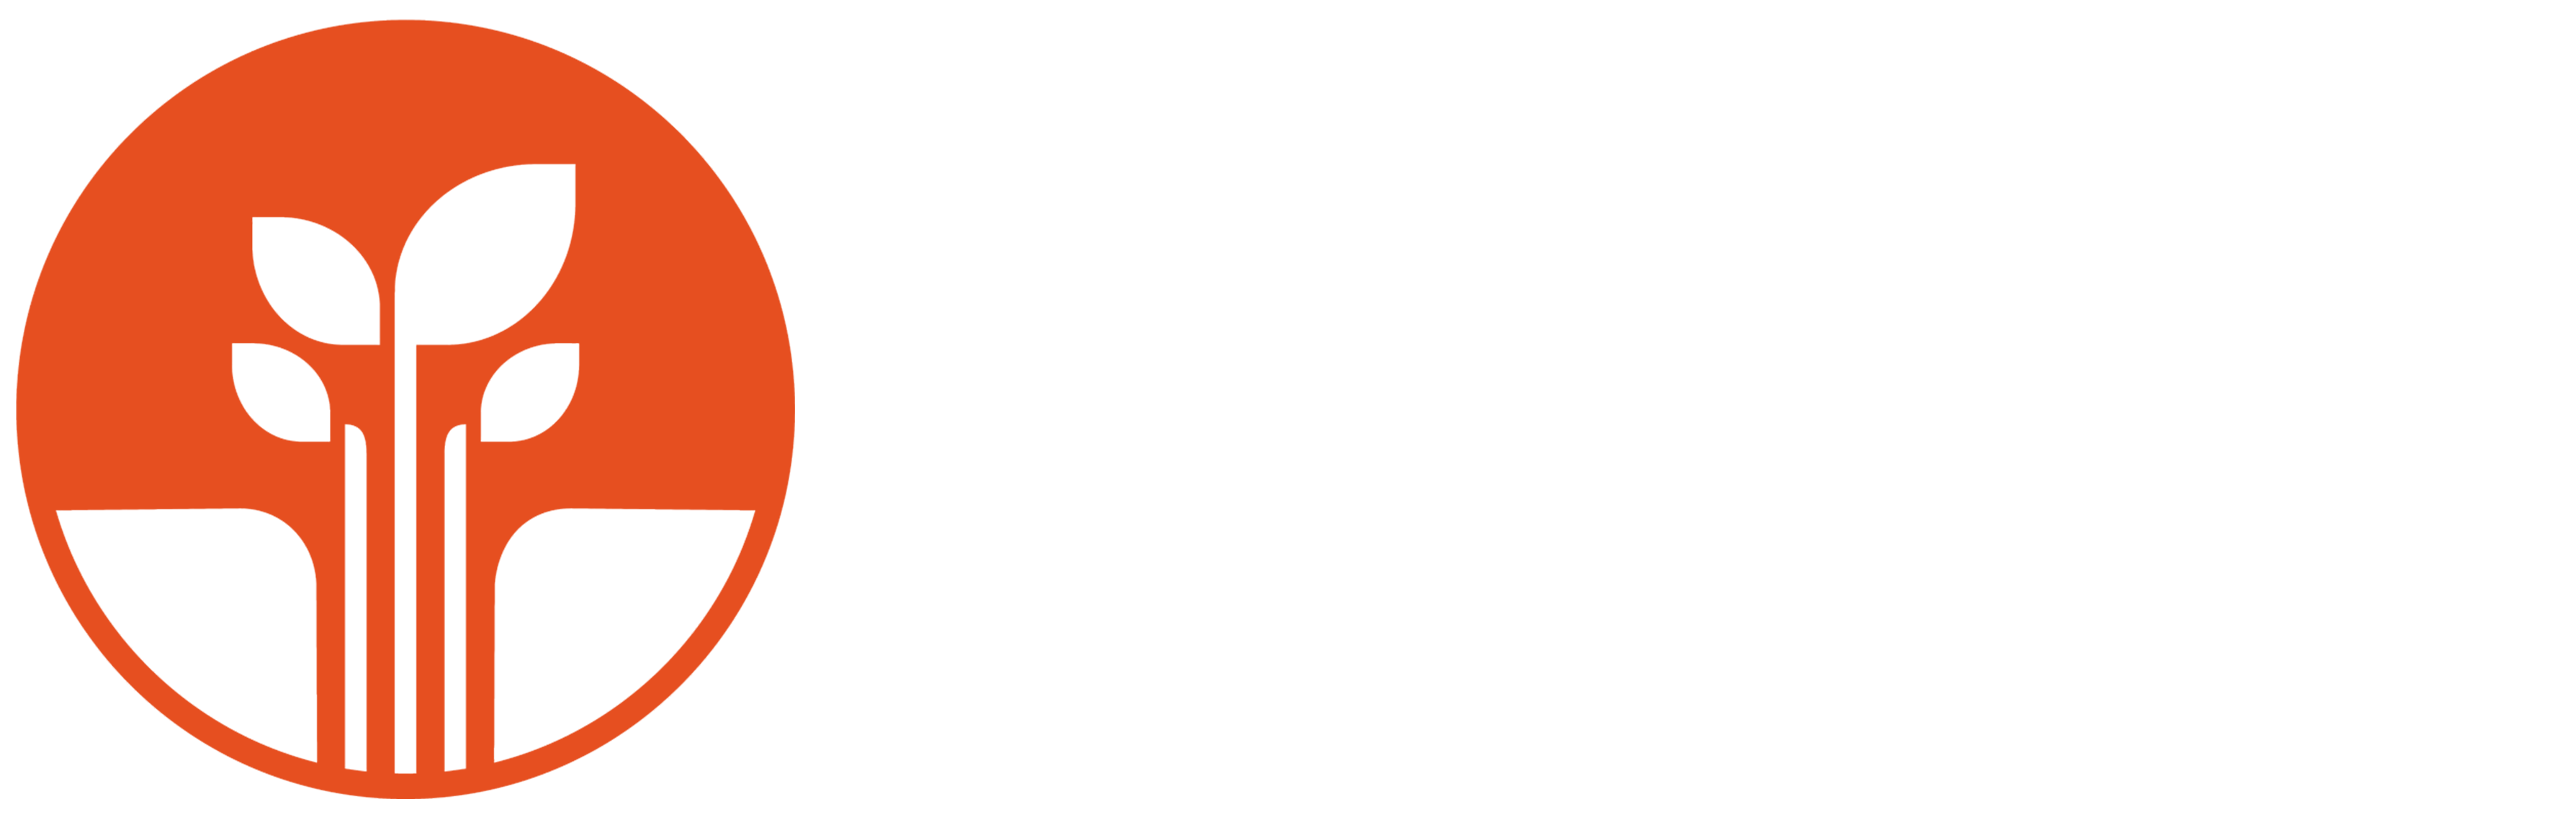 shed-grounds-maintenance-logo-fill